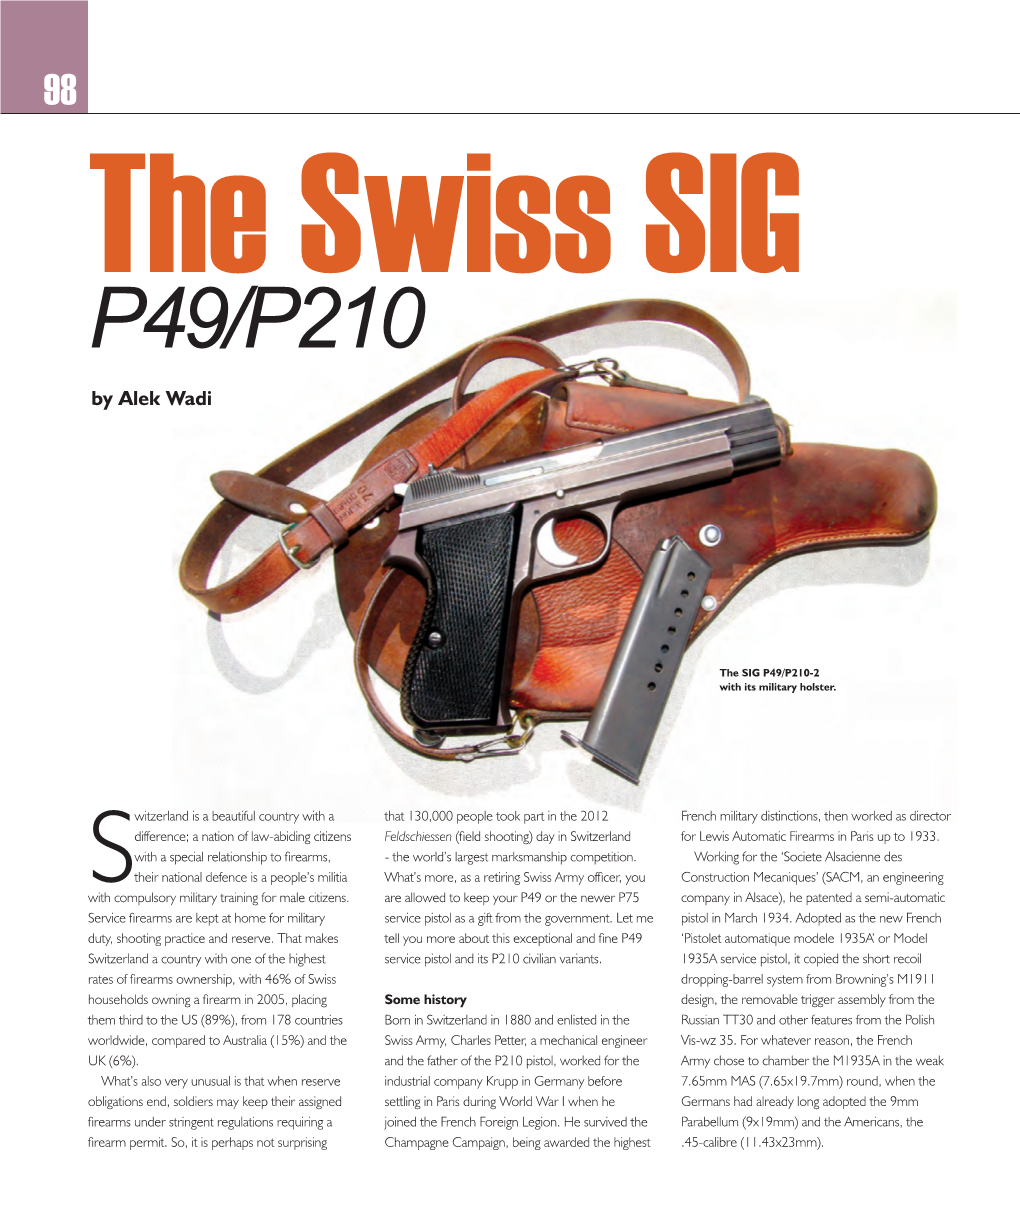 The Swiss SIG P49/P210